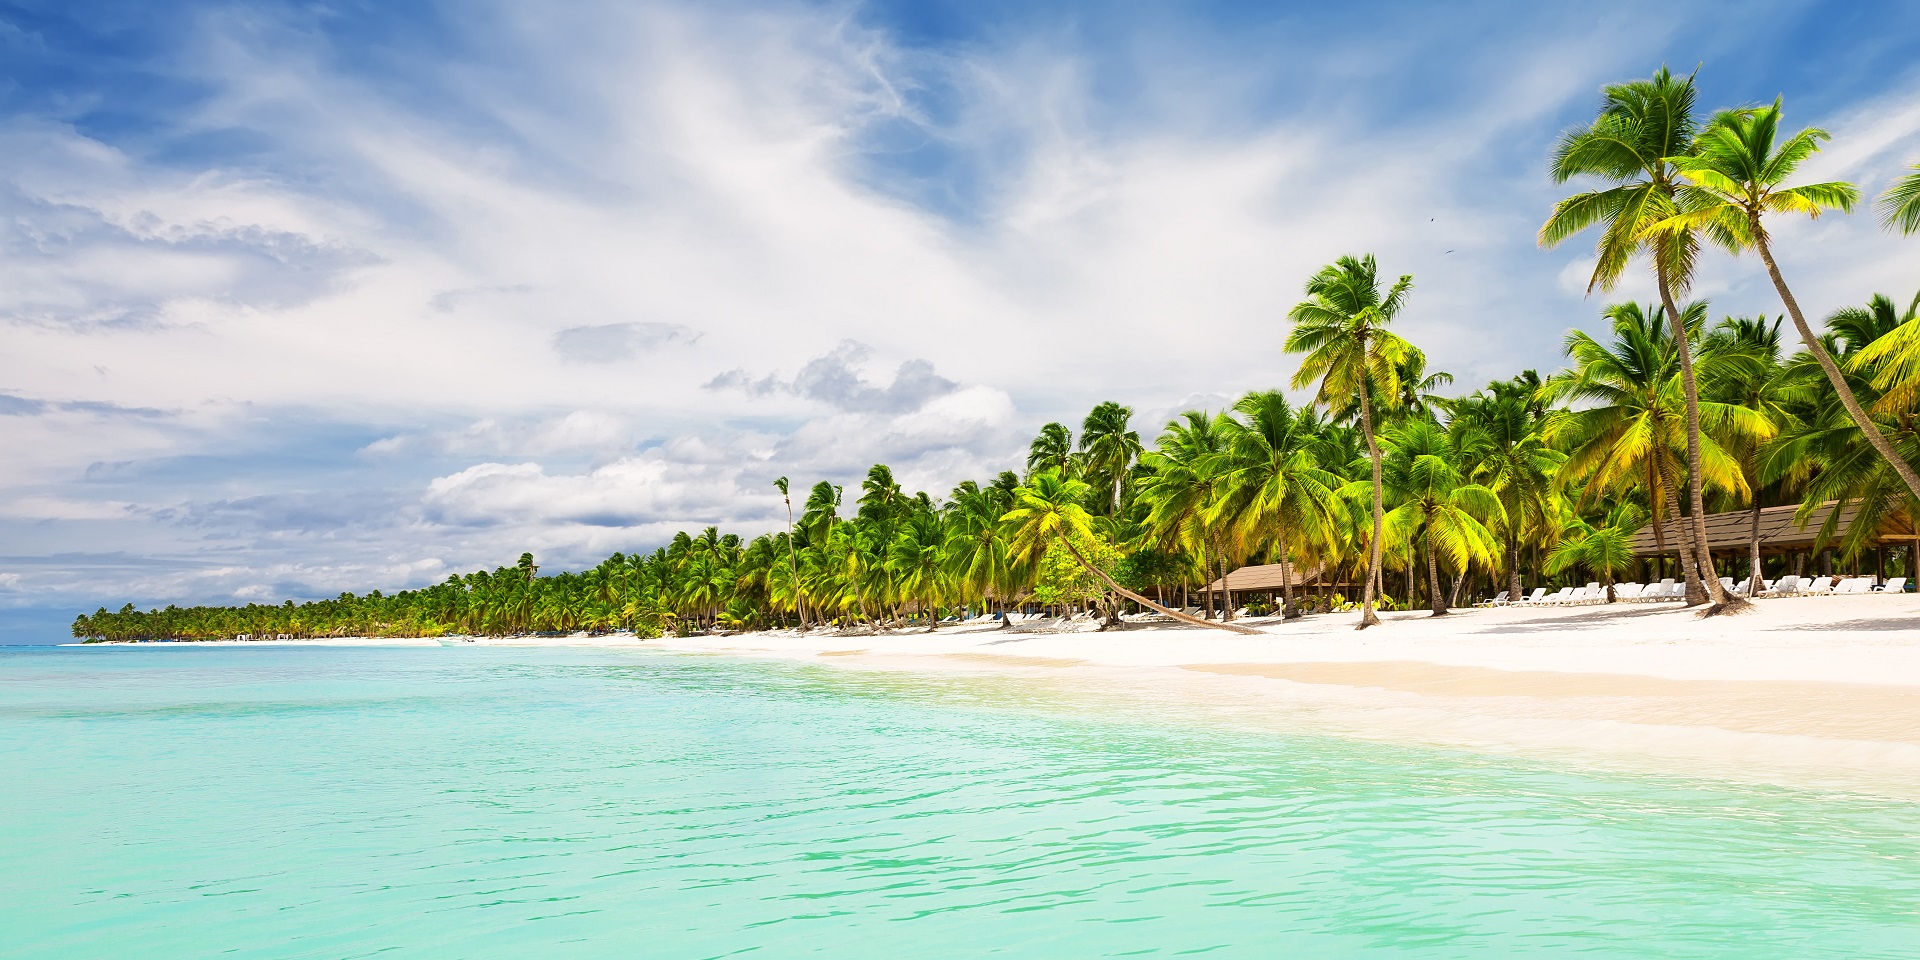 dominican republic beach